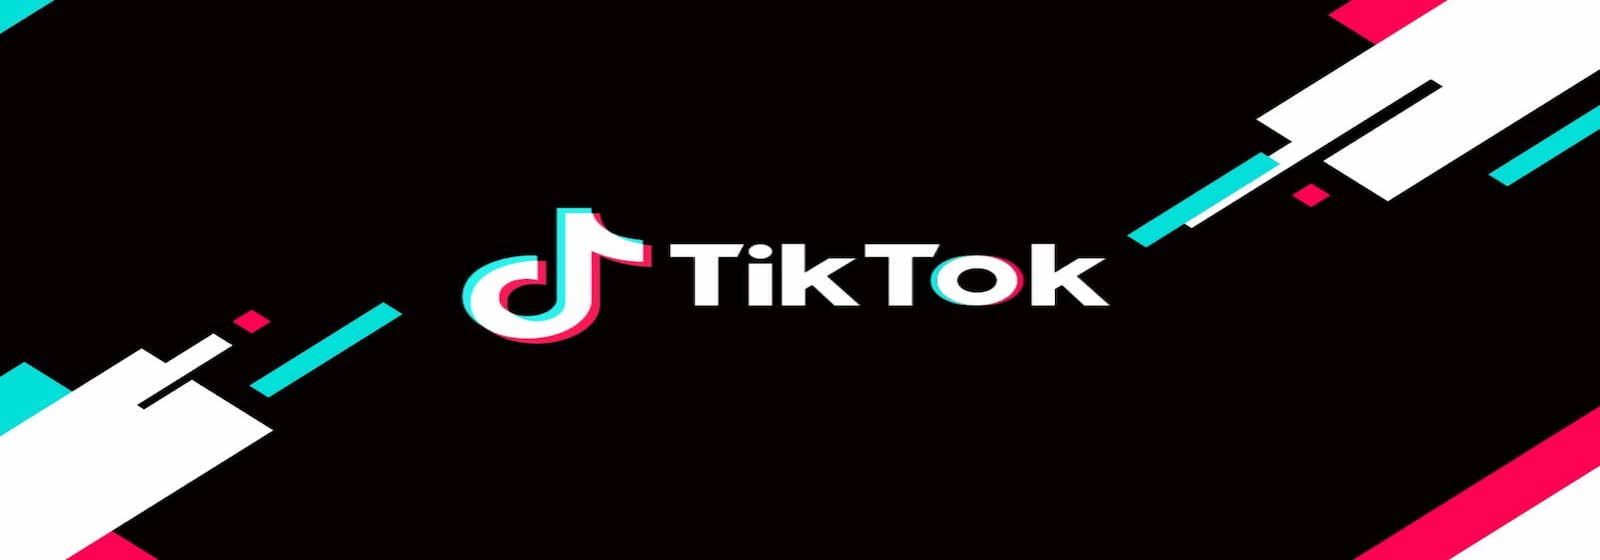 How to create a successful TikTok marketing campaign